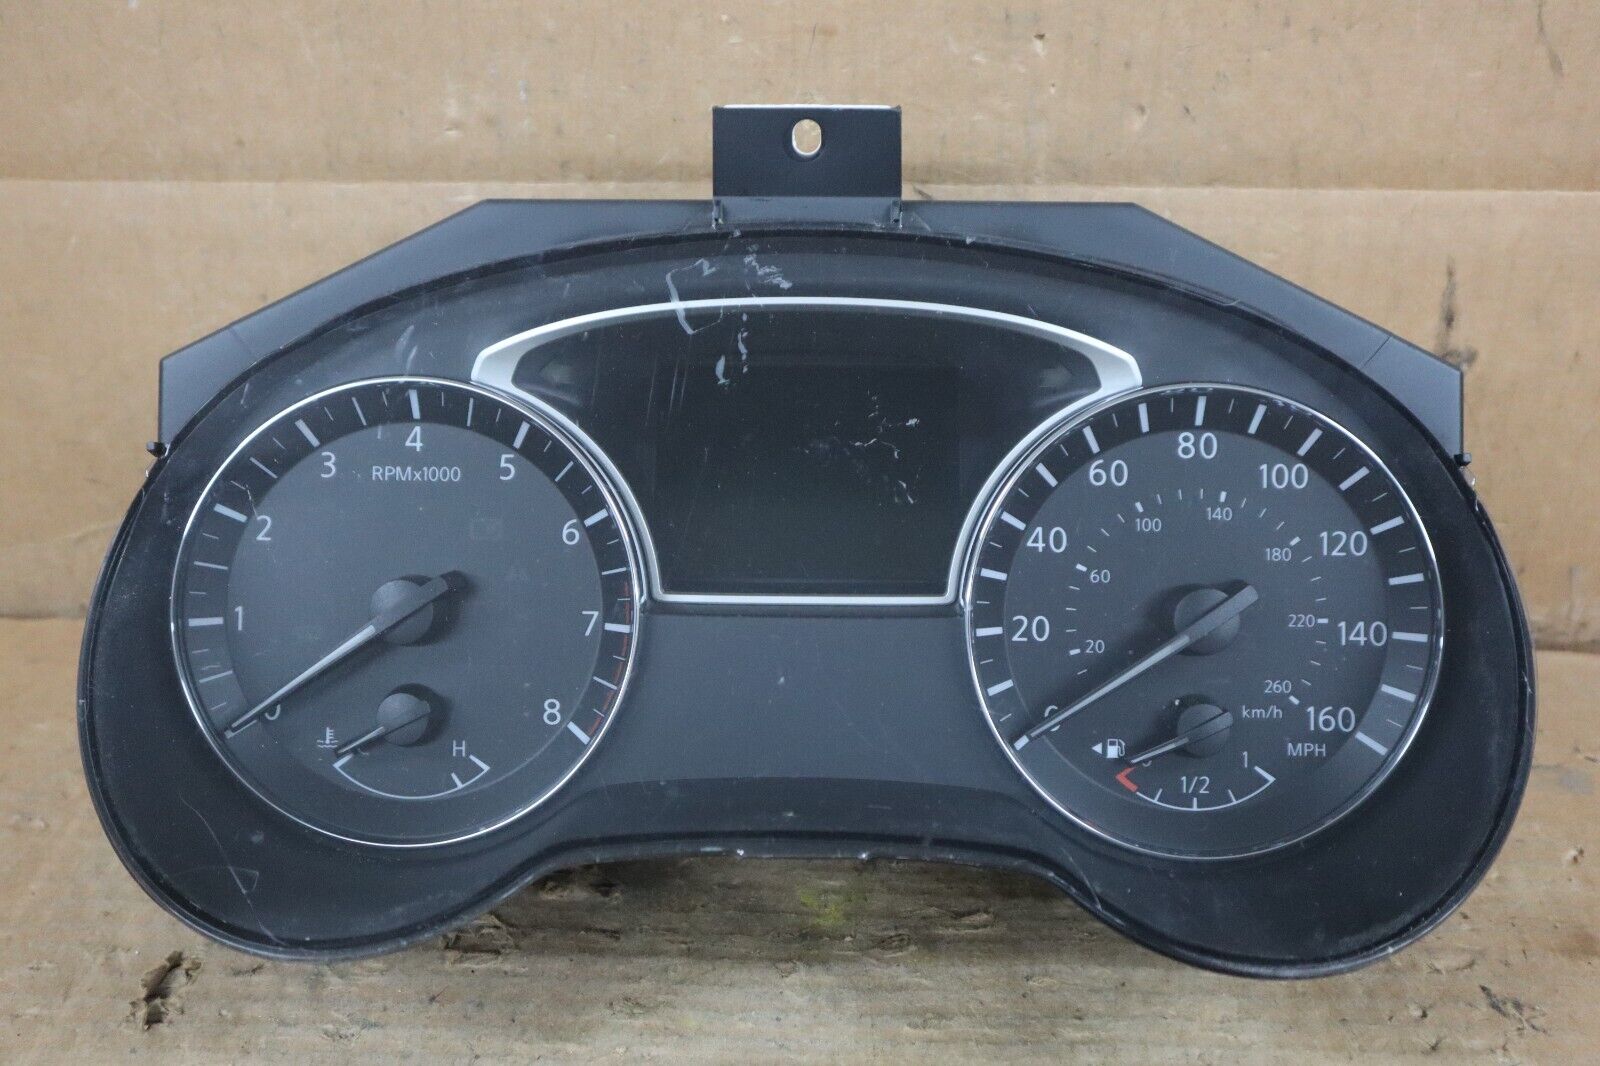 2017 Nissan Pathfinder Instrument Head Speedometer Gauge Cluster 117,524 Miles